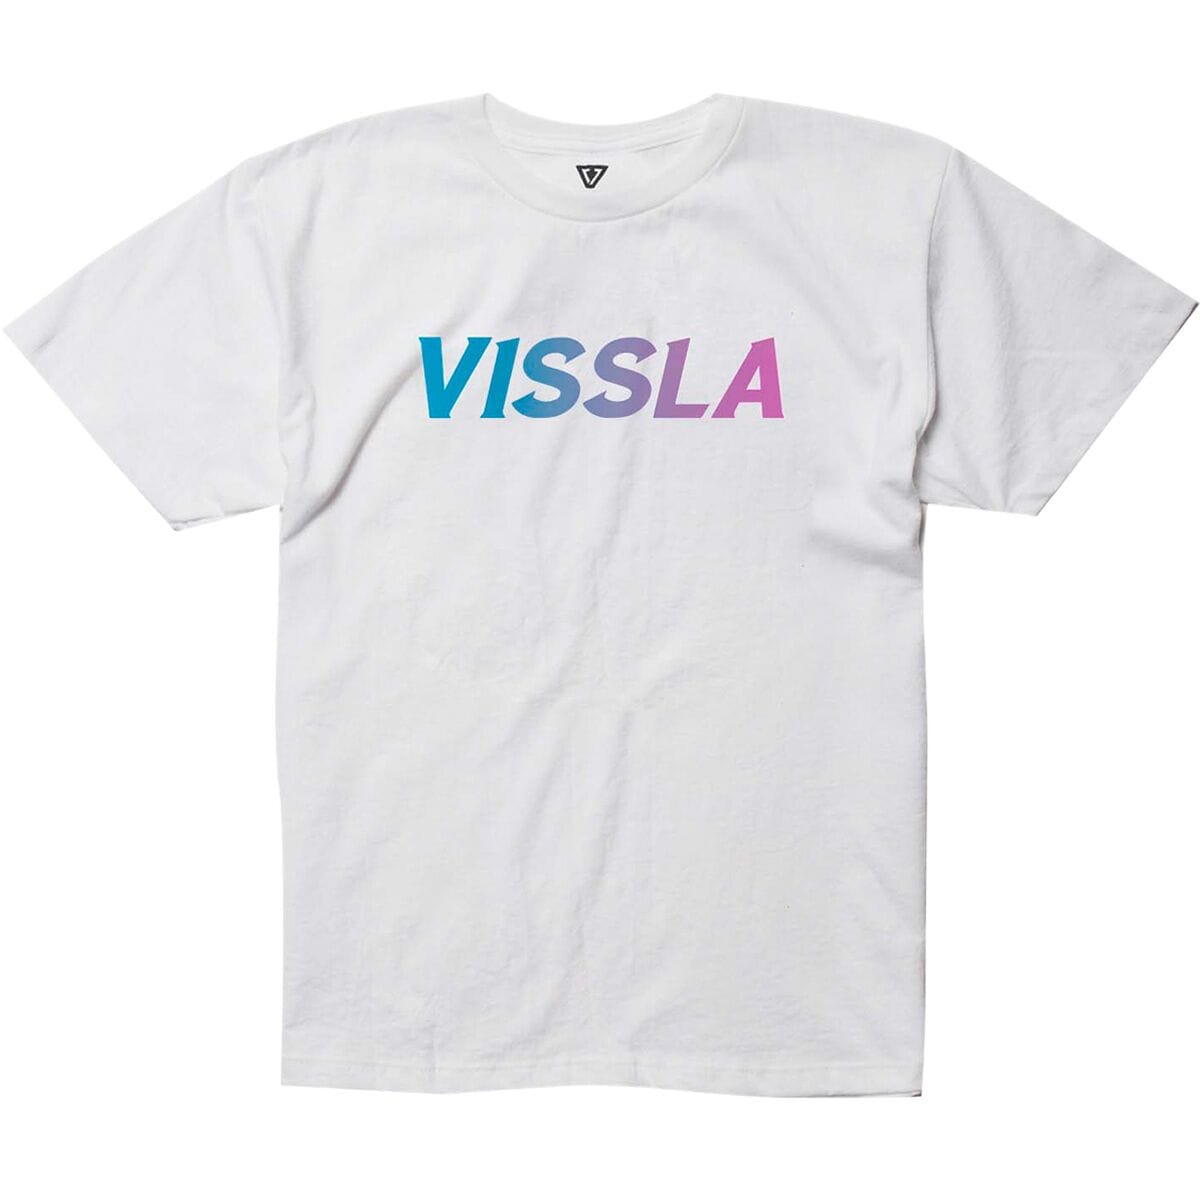 Vissla 7 Seas Bolt Short-Sleeve Graphic T-Shirt - Toddler Boys'